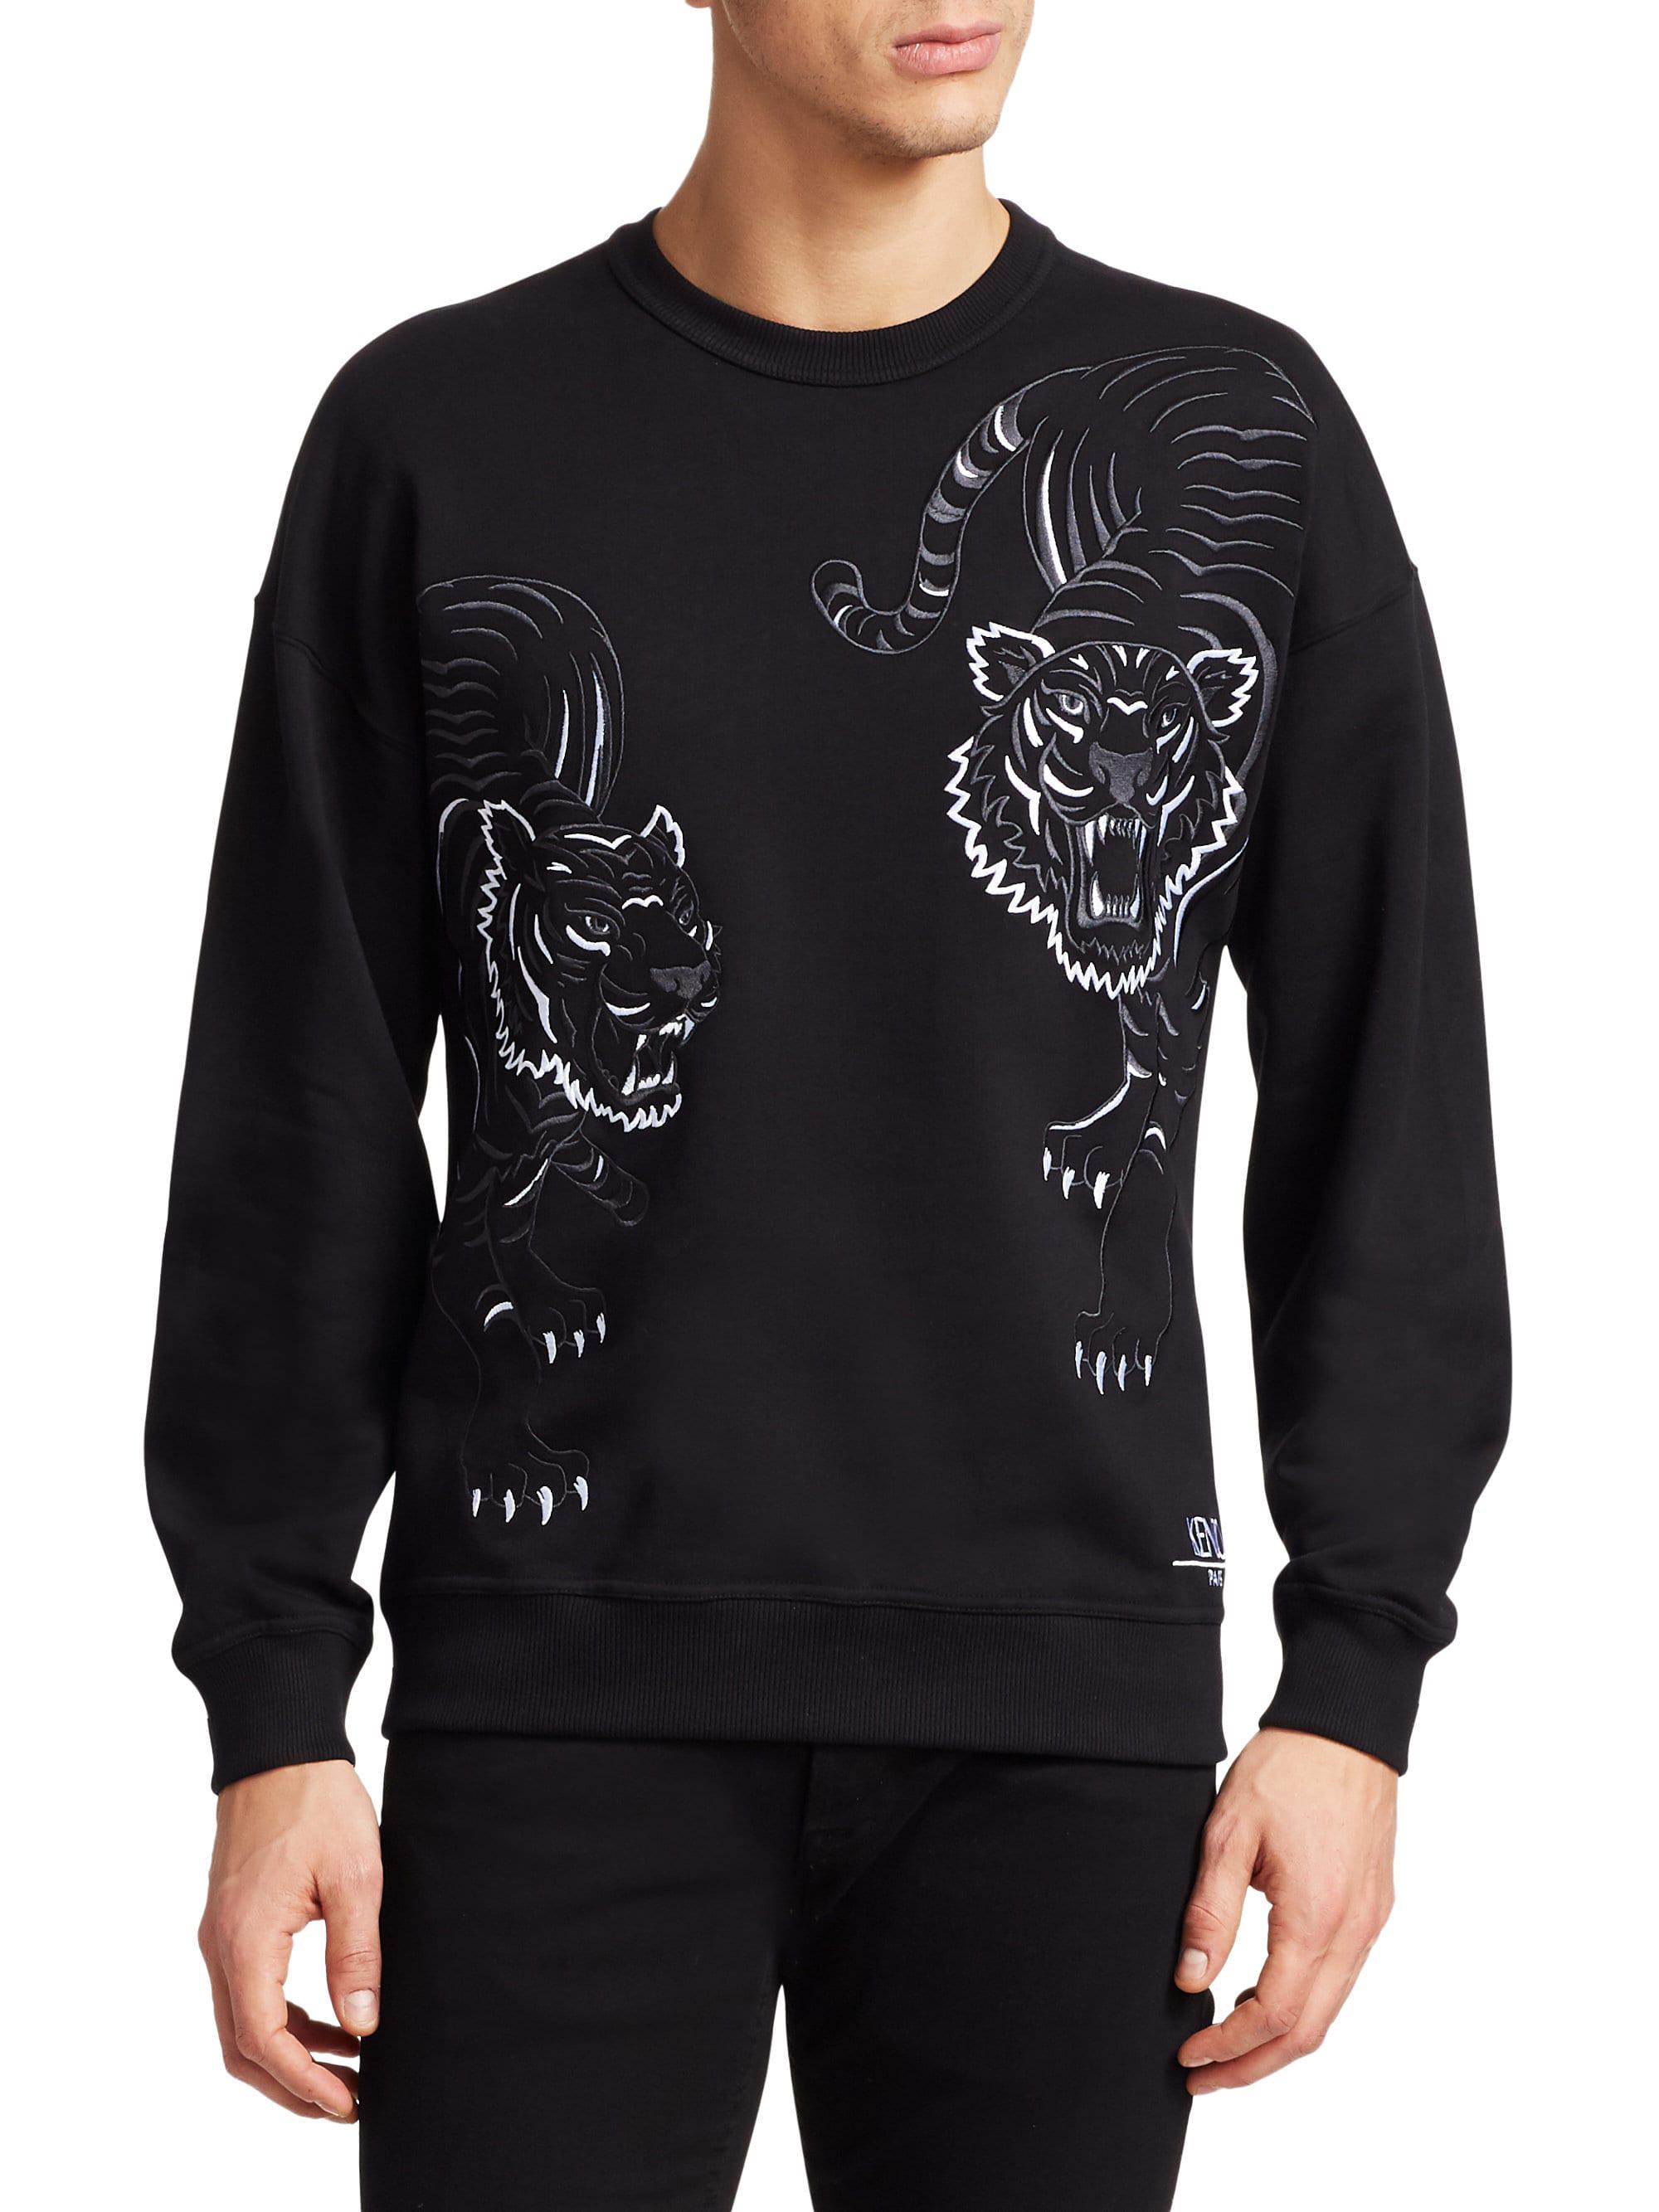 KENZO Cotton Double Tiger Sweatshirt in Black for Men - Lyst